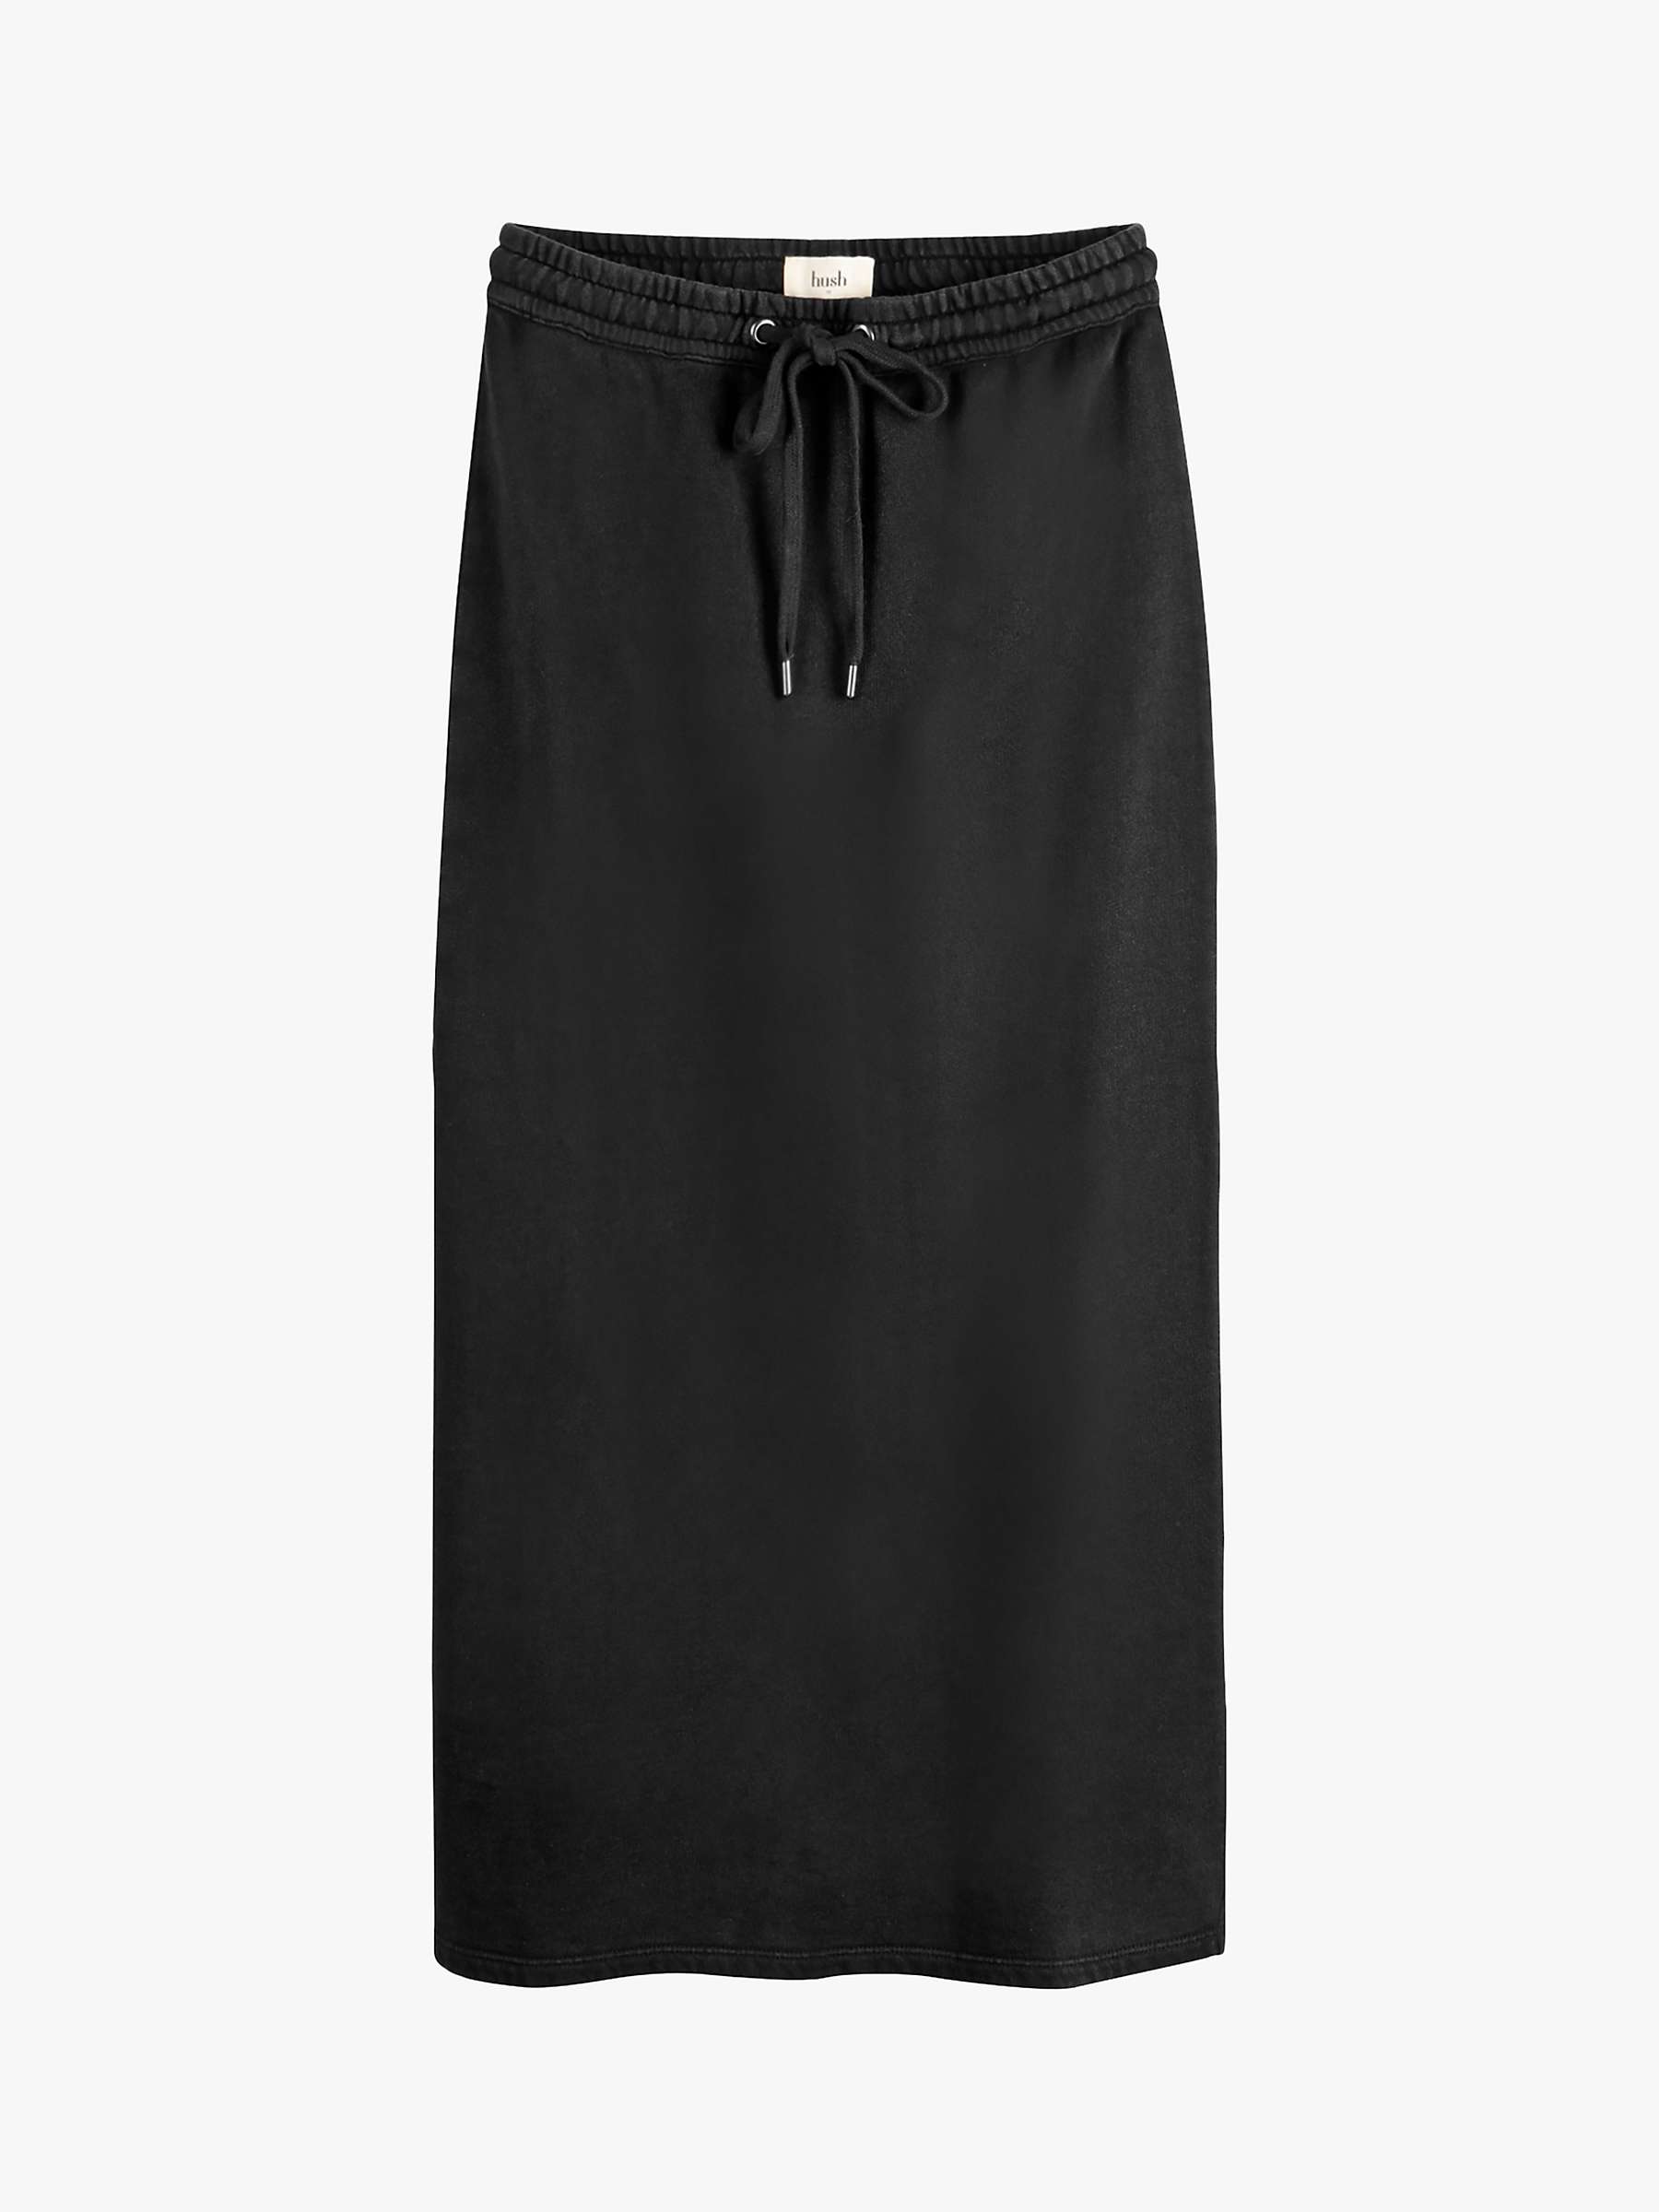 Buy hush Connie Midi Jersey Skirt, Black Online at johnlewis.com